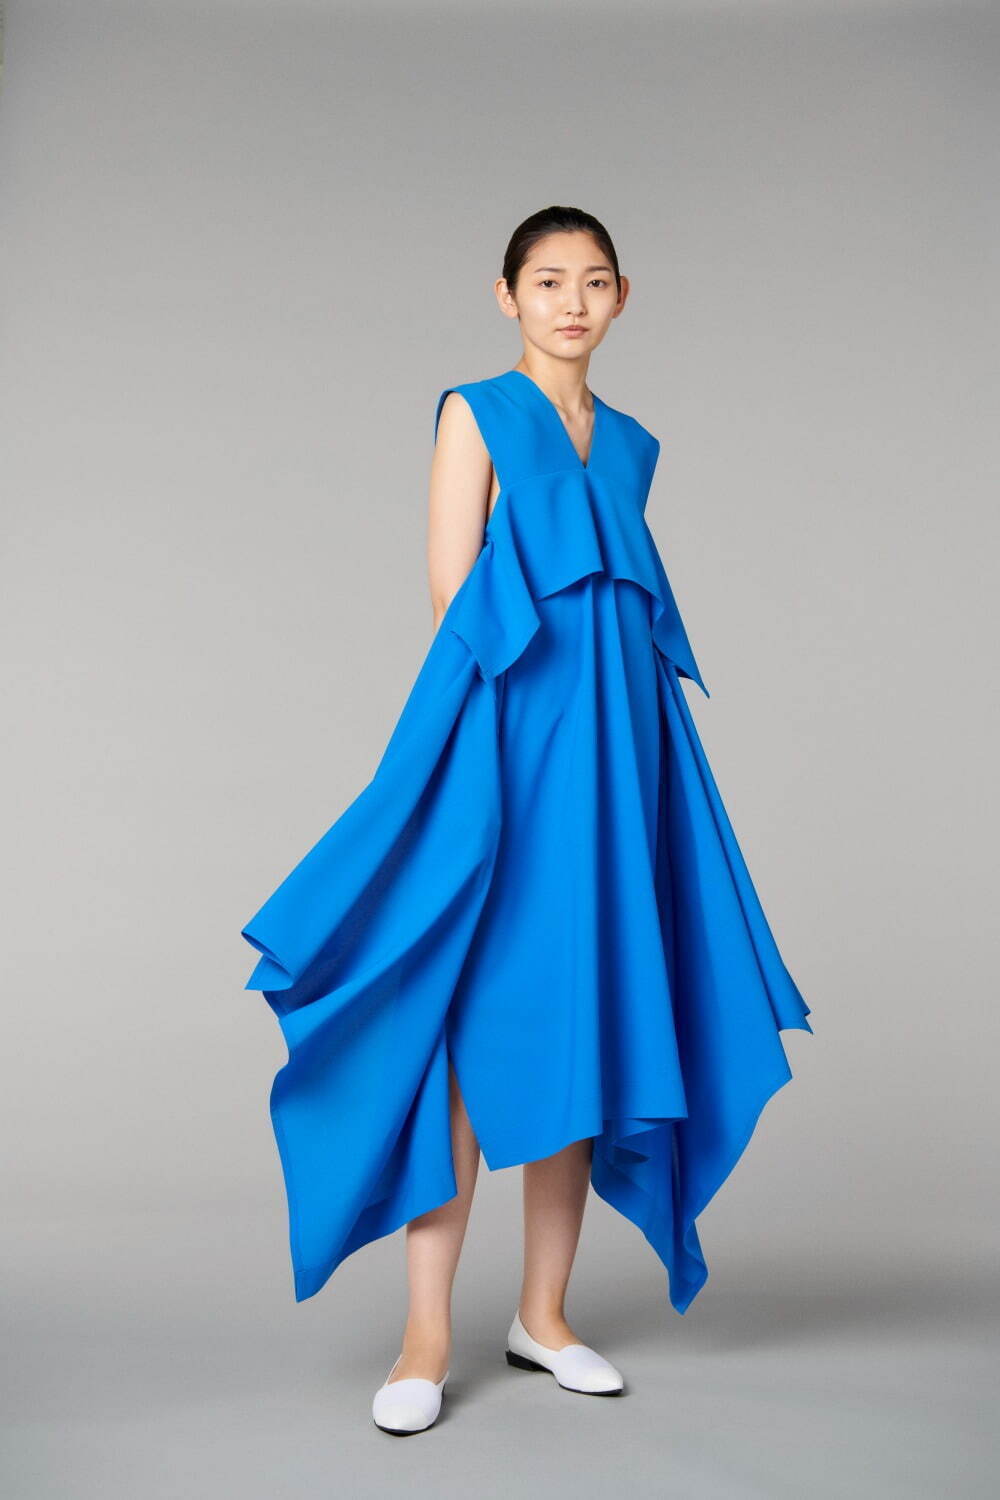 「FUROSHIKI」ドレス 57,200円